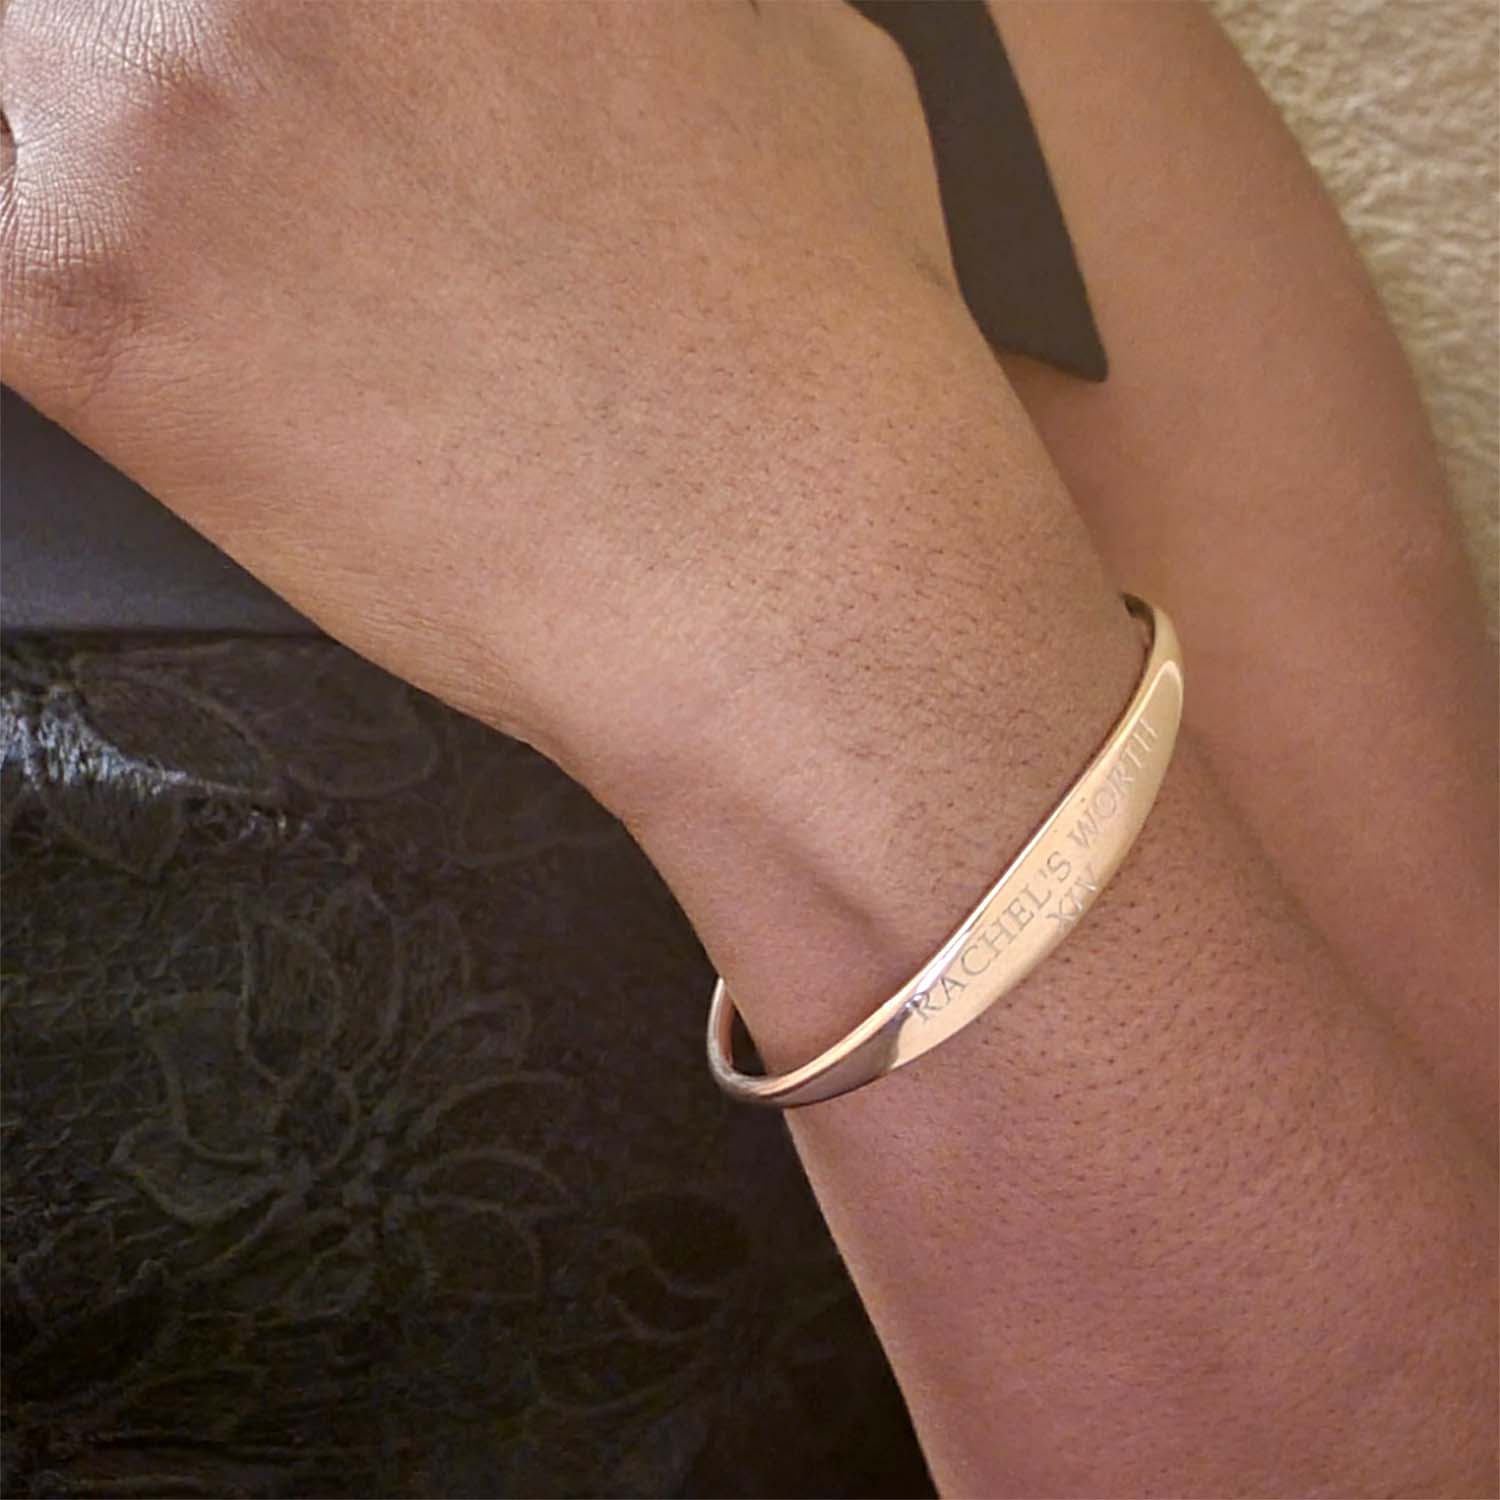 RW XIV Cuff Bracelet in Rose Gold